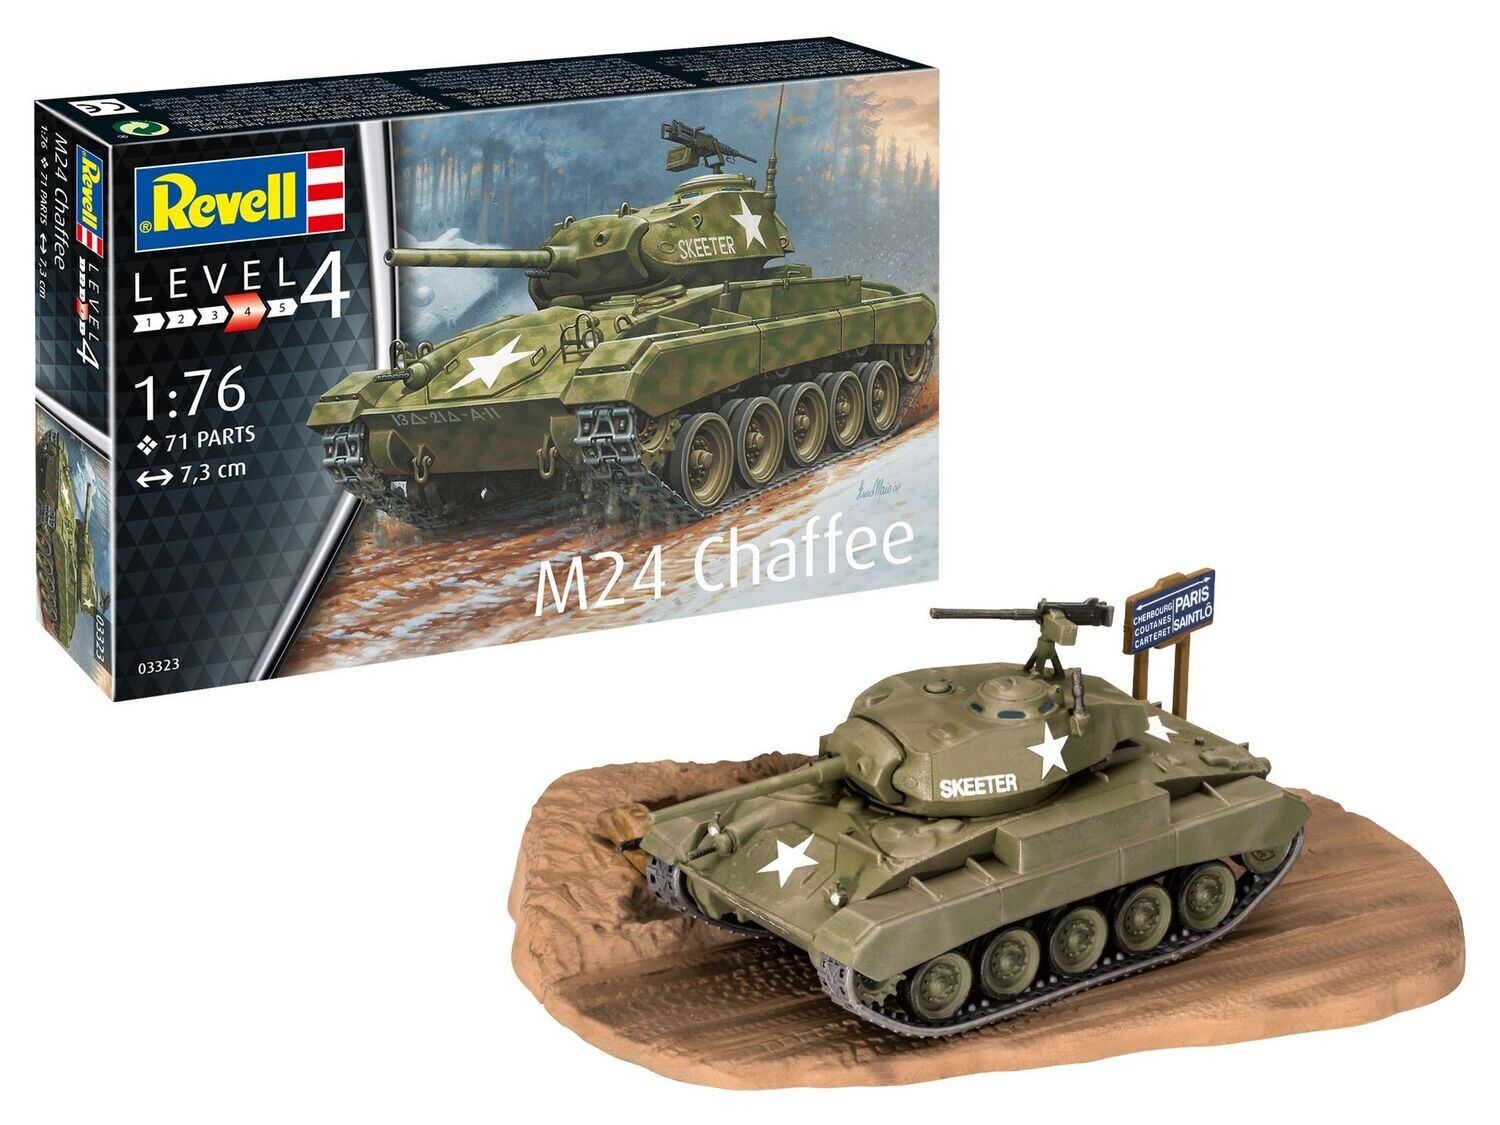 Revell 03323 M24 Chaffee 1:76 Scale Plastic Model Kit